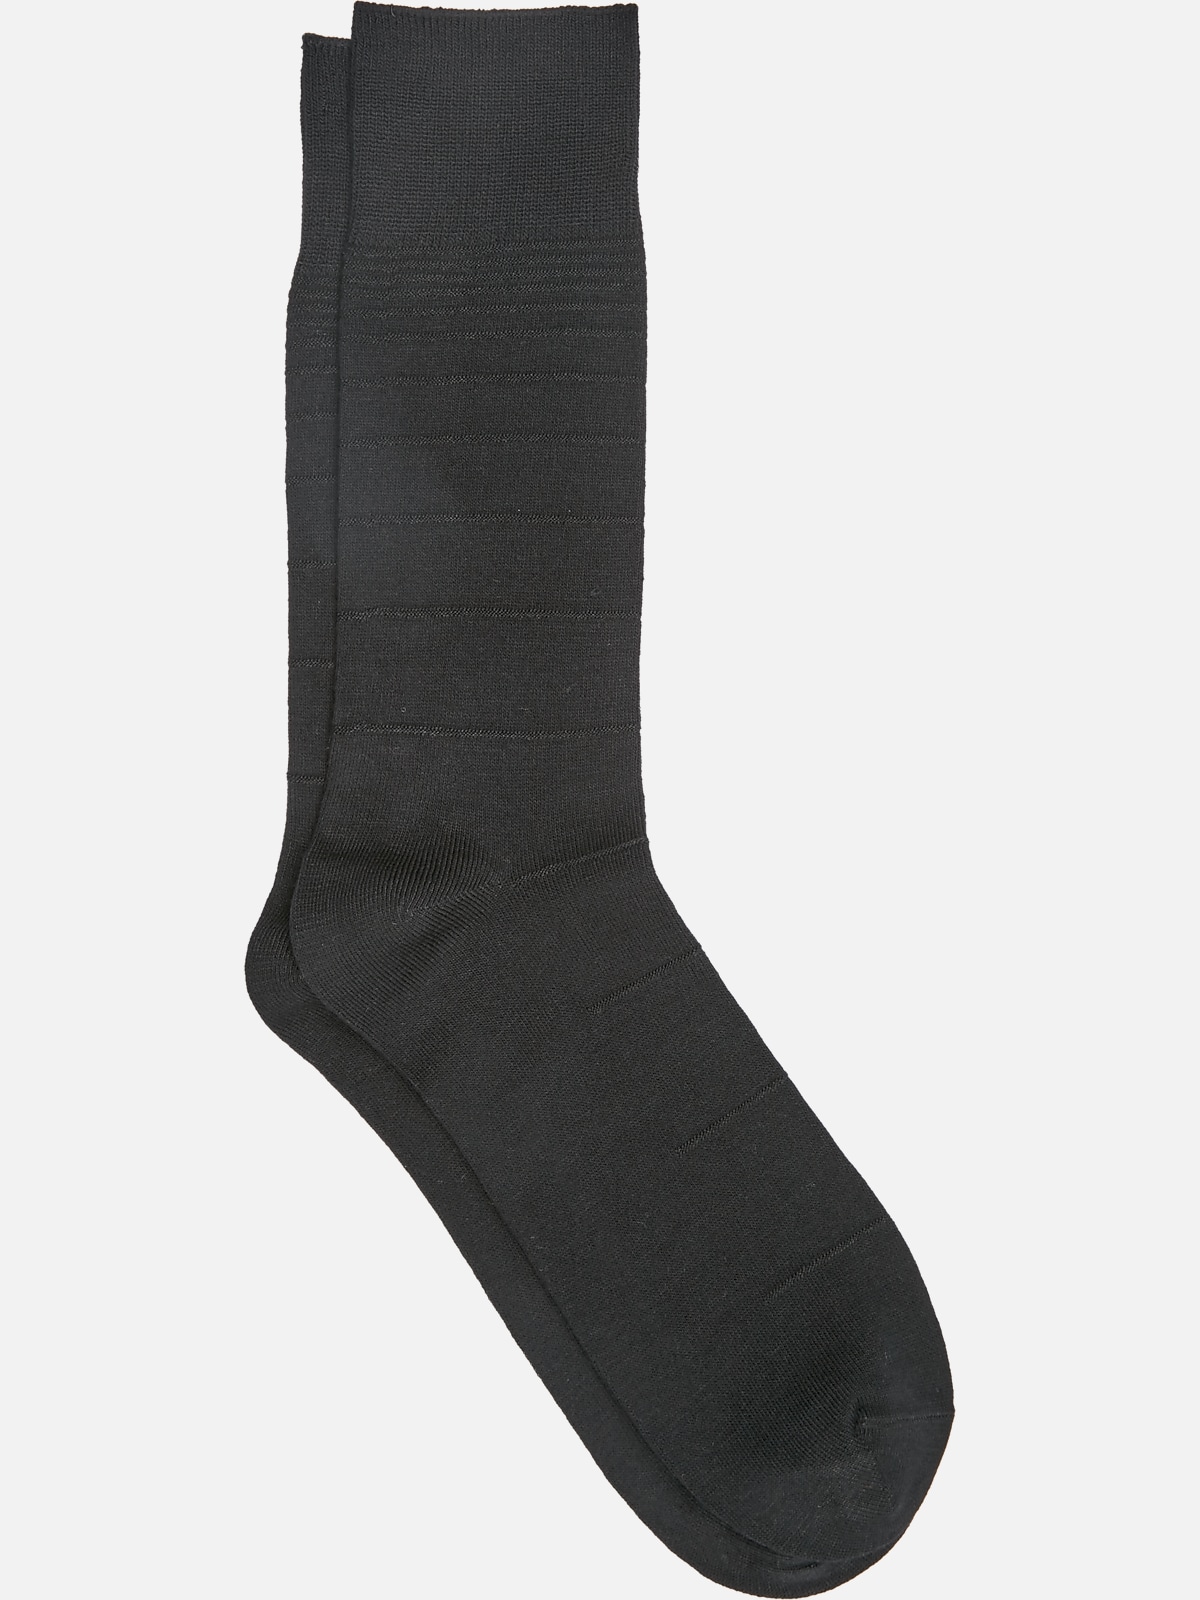 Pronto Uomo Socks | All Clearance $39.99| Men's Wearhouse